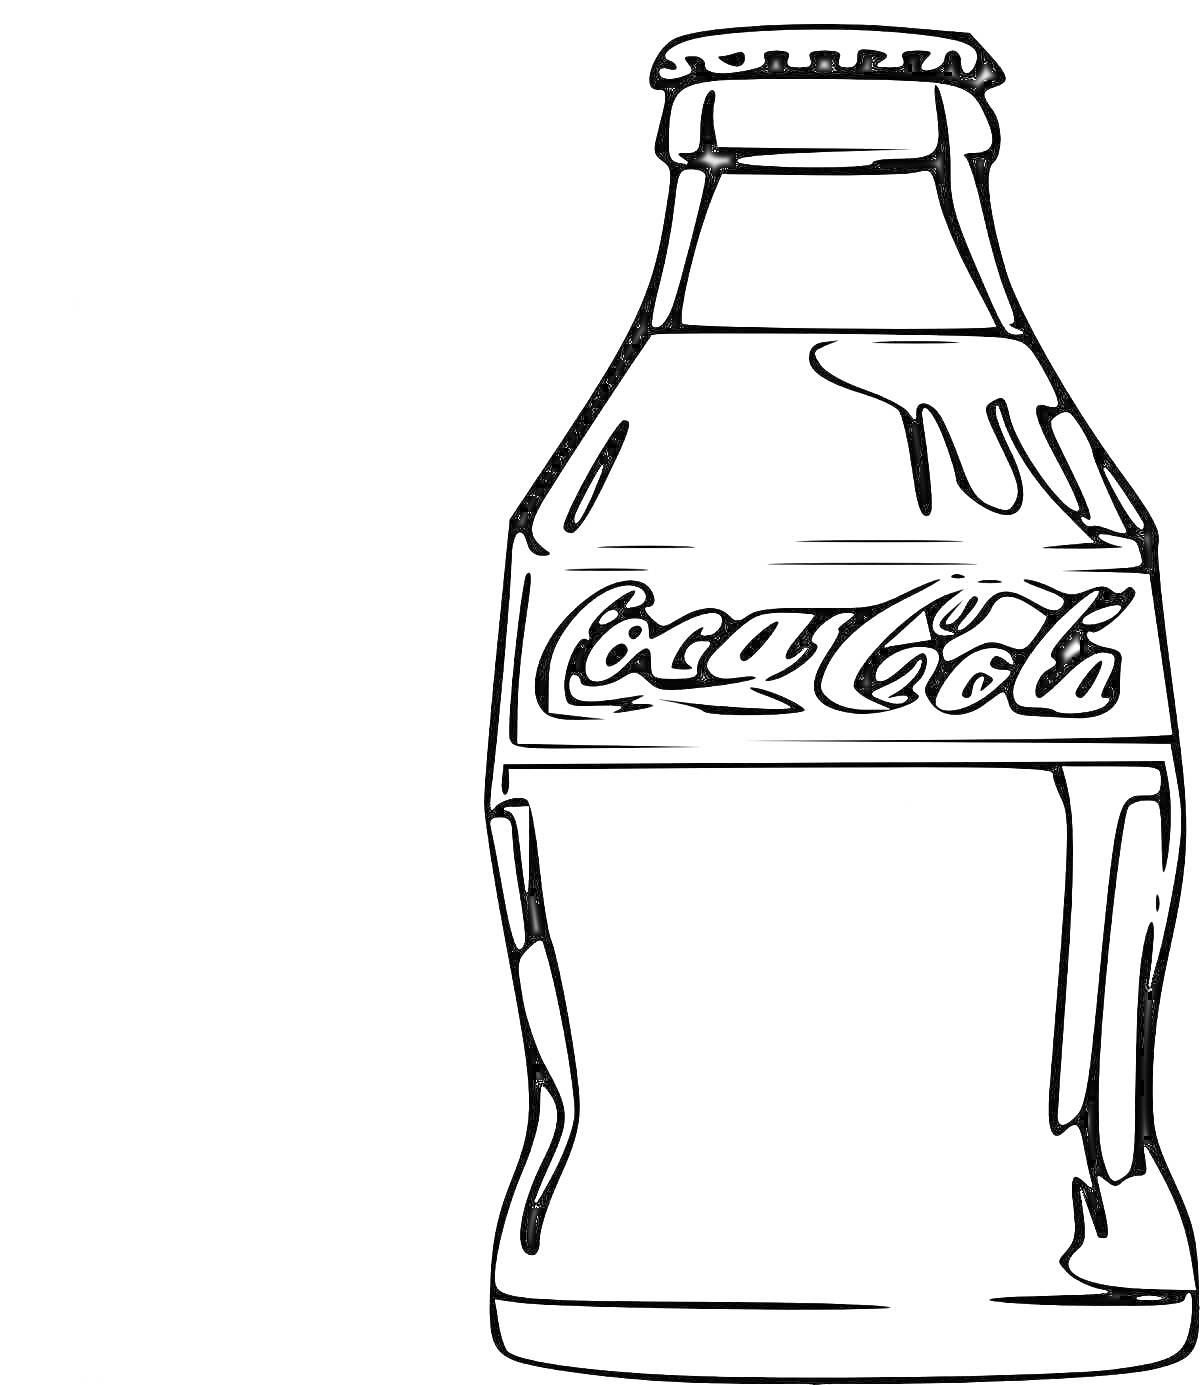 На раскраске изображено: Бутылка, Кока-кола, Напиток, Без цвета, Контурные рисунки